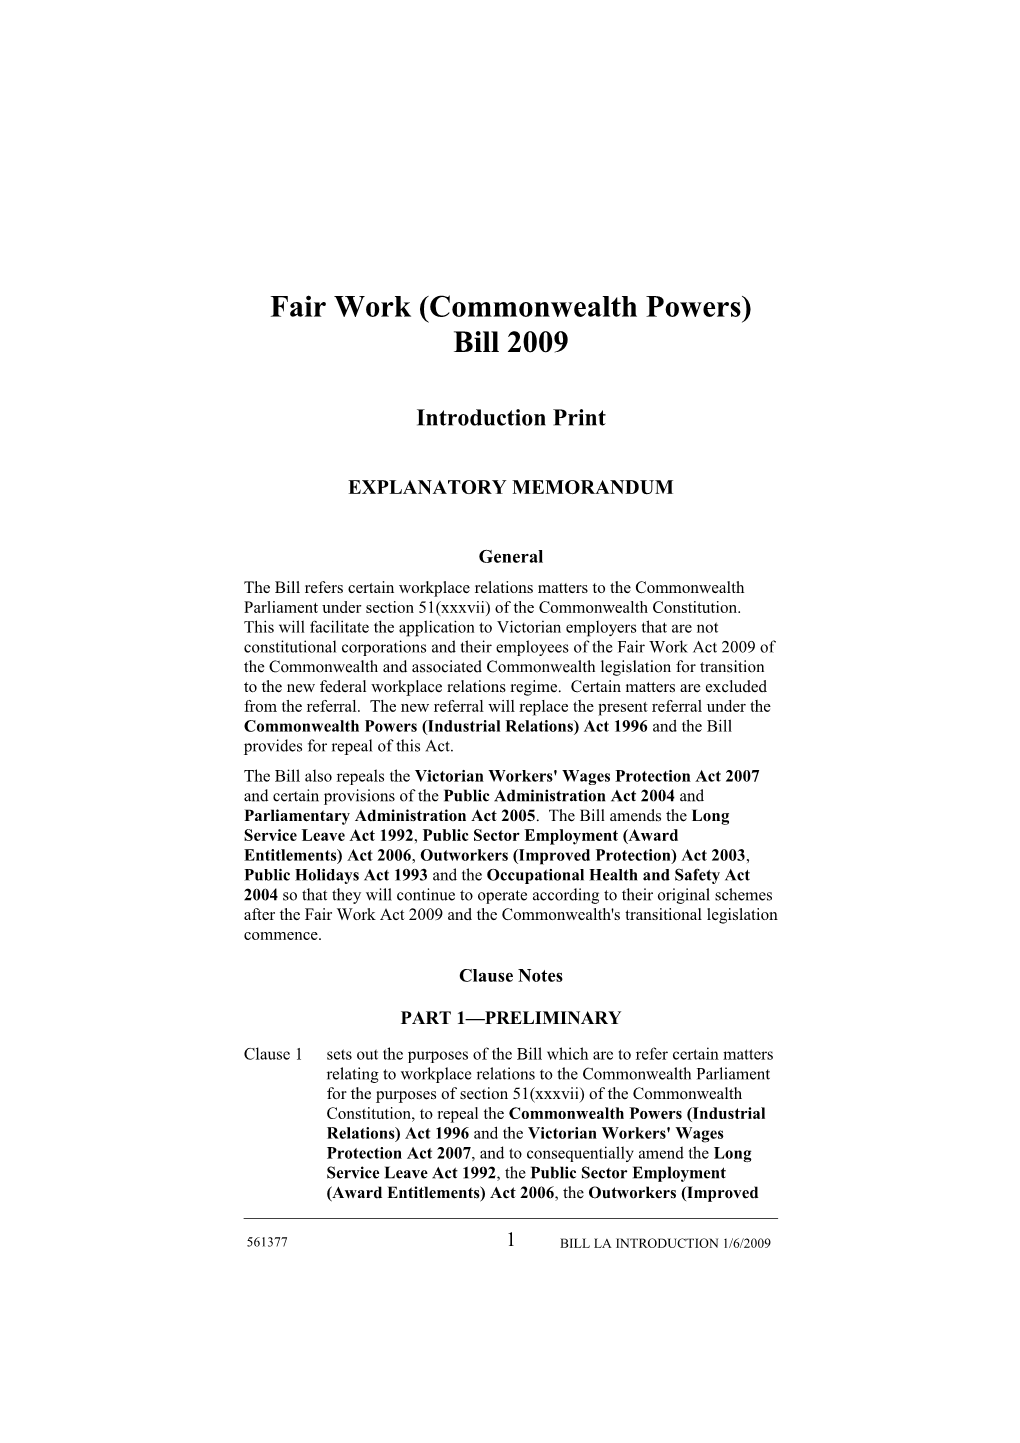 Fair Work (Commonwealth Powers) Bill 2009